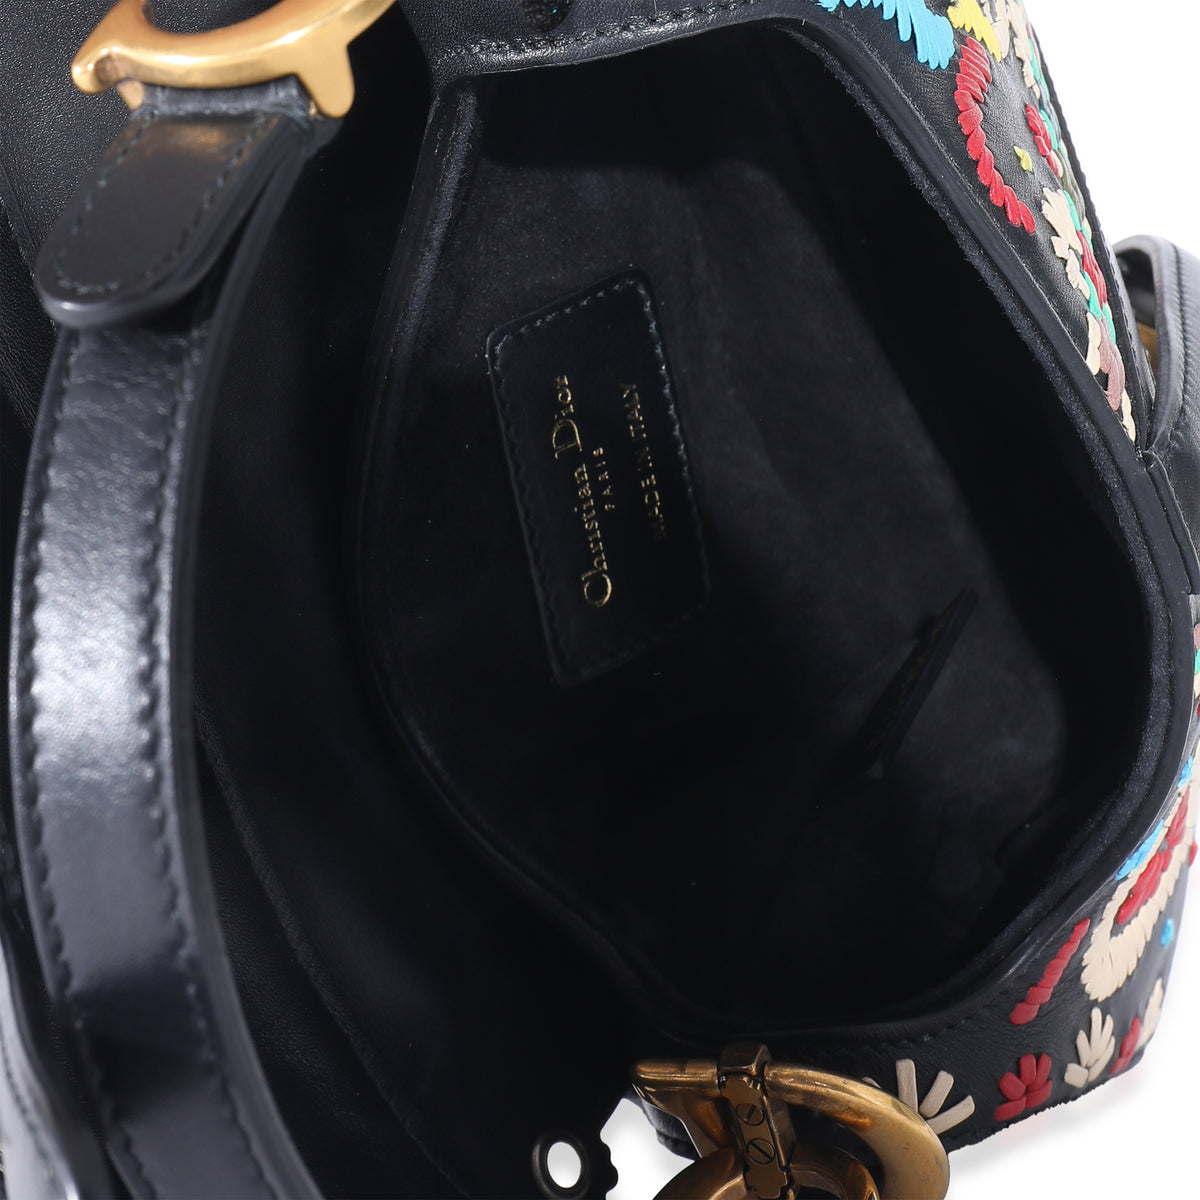 Christian Dior Black Multicolor Embroidered Mini Saddle Bag